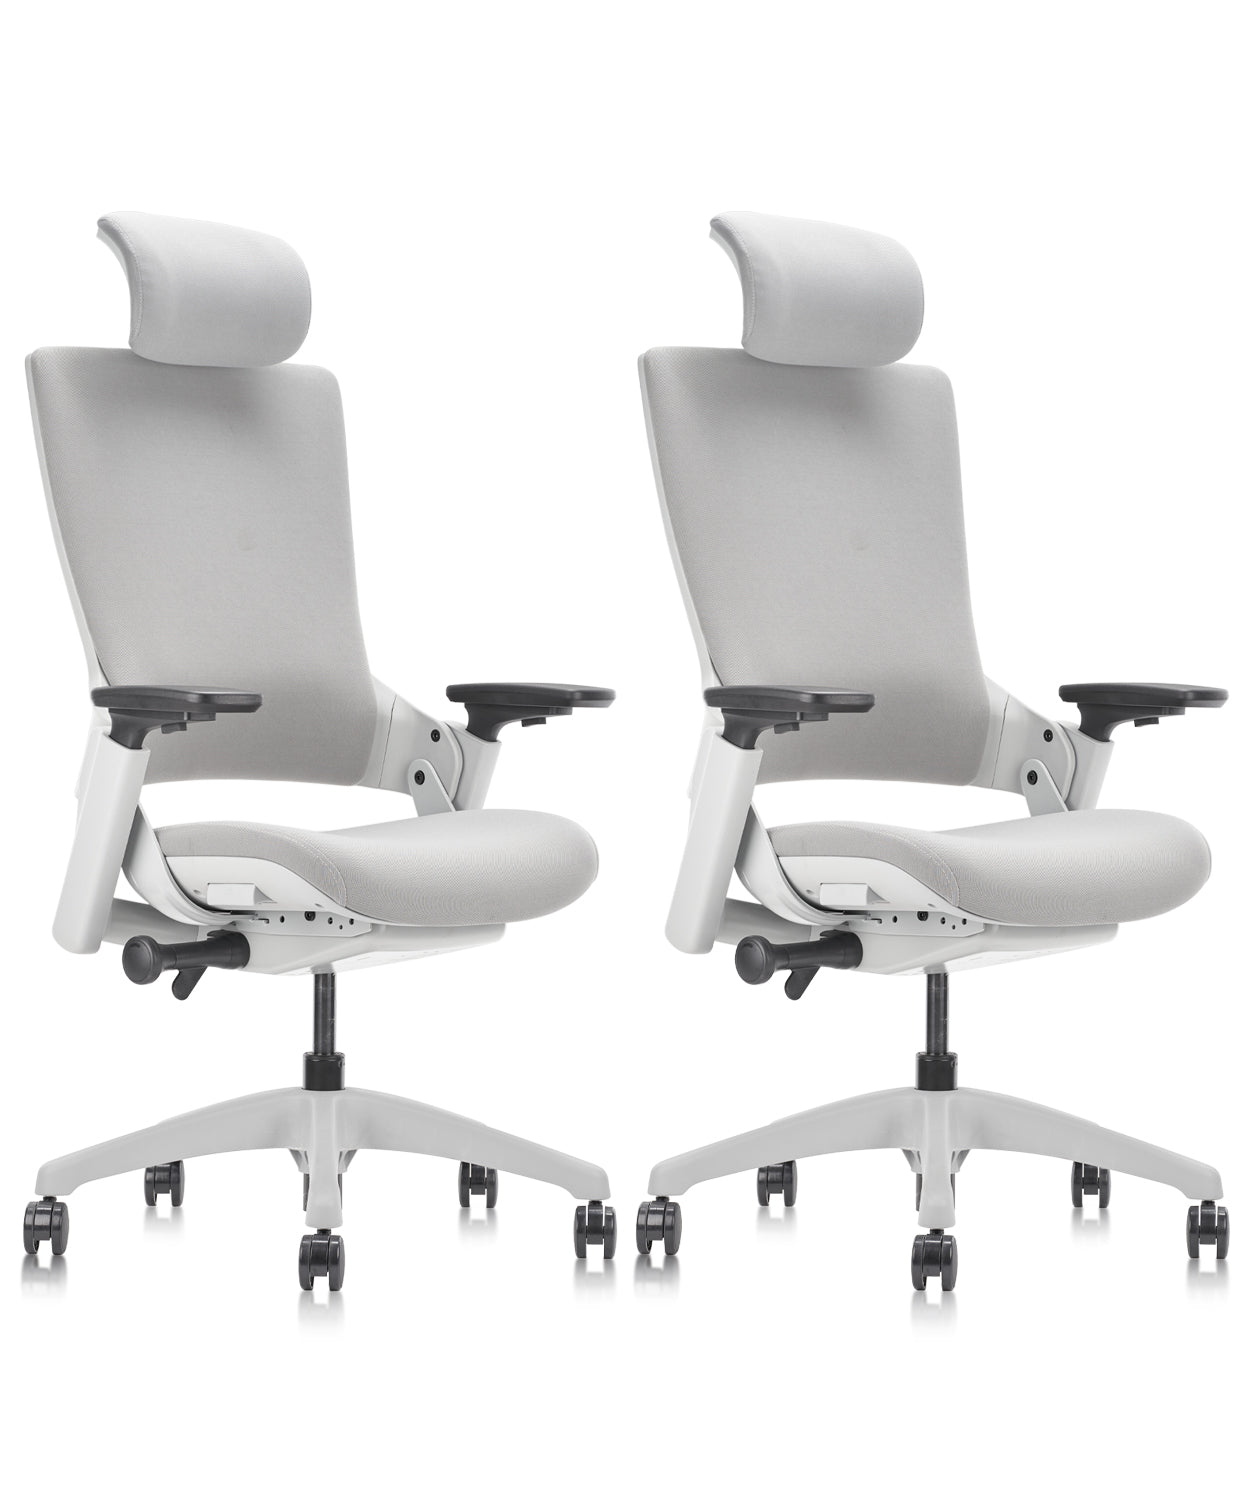 CLATINA Ergonomic High Swivel Executive Chair with Adjustable